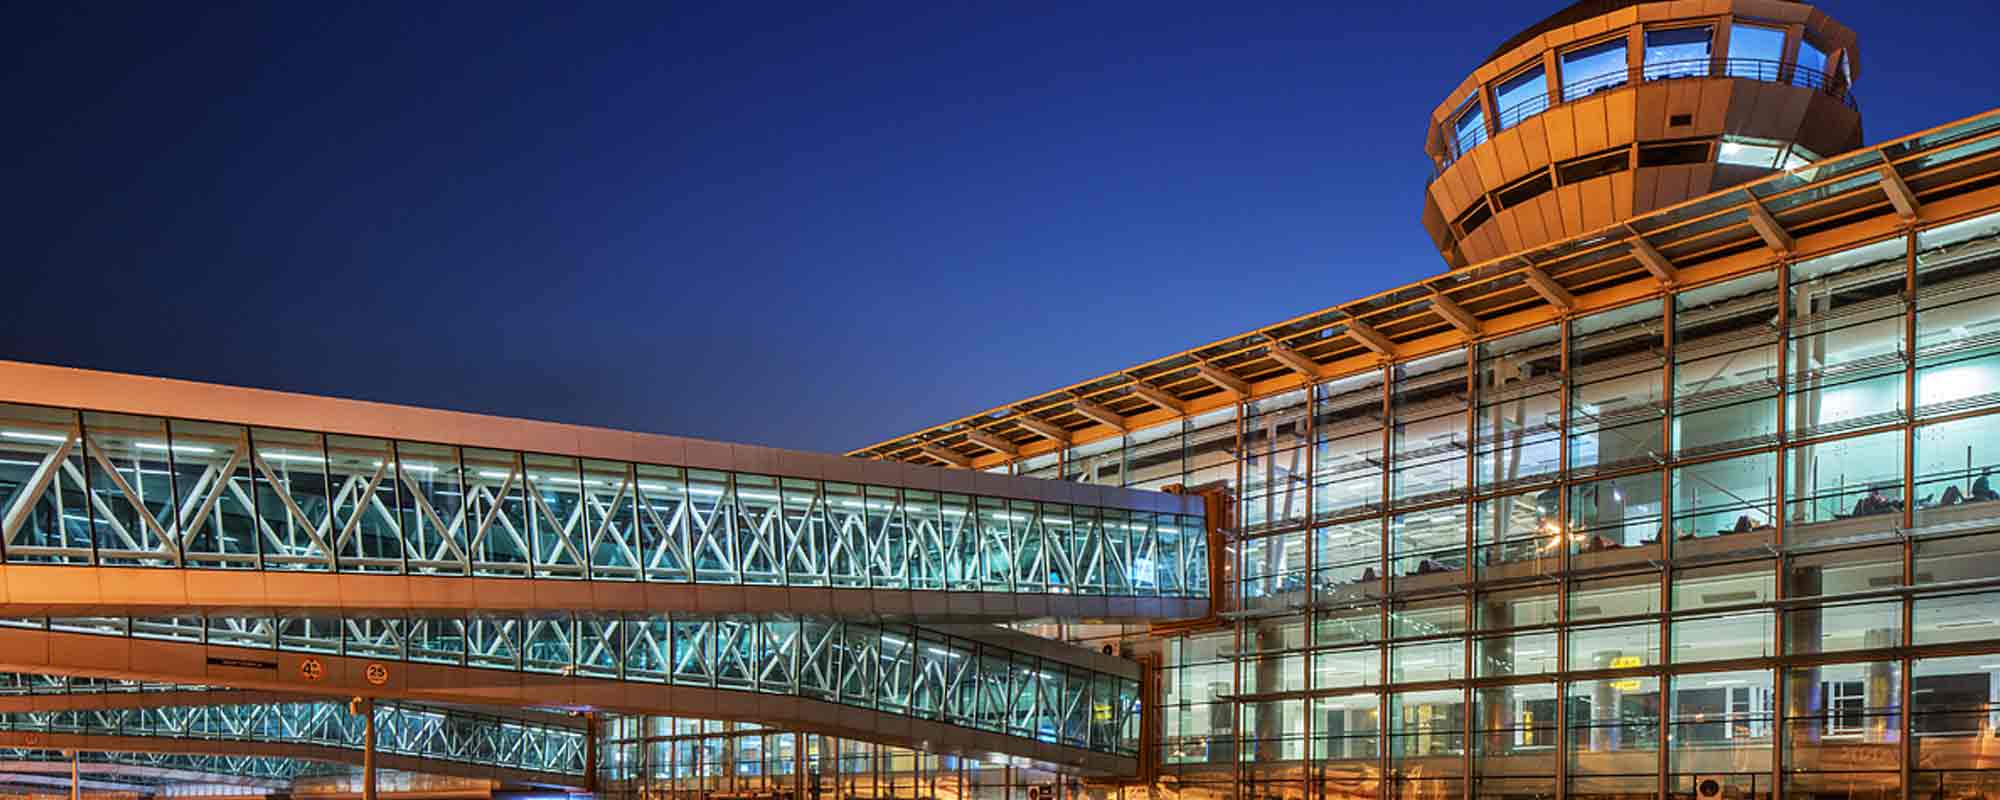 İzmir Adnan Menderes Havalimanı Araç Kiralama Ofisi